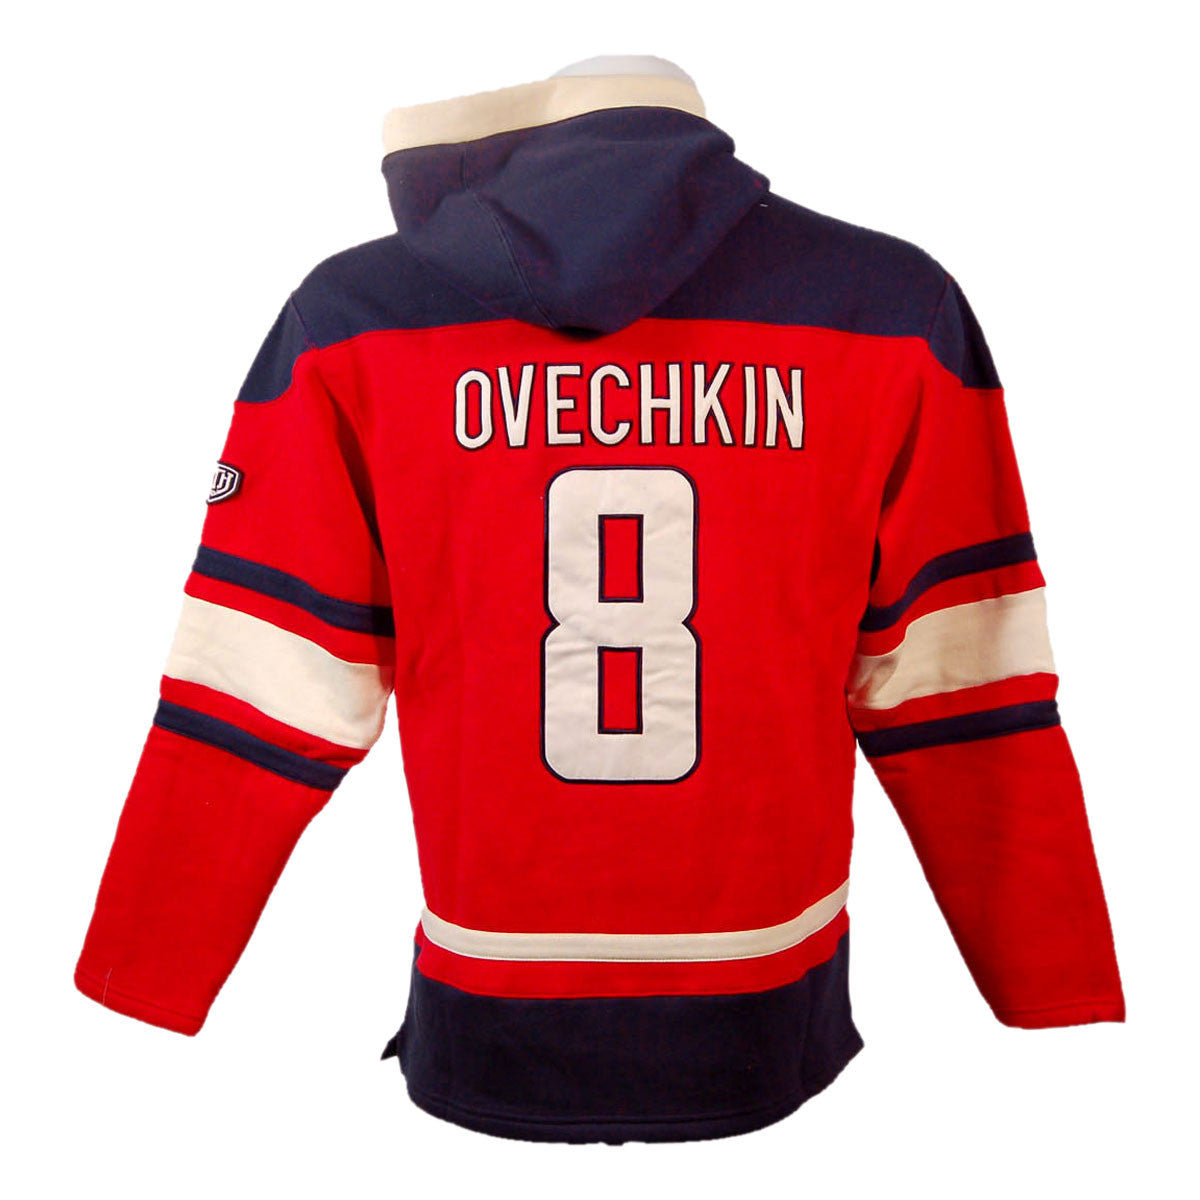 ovechkin-jersey-hoodie